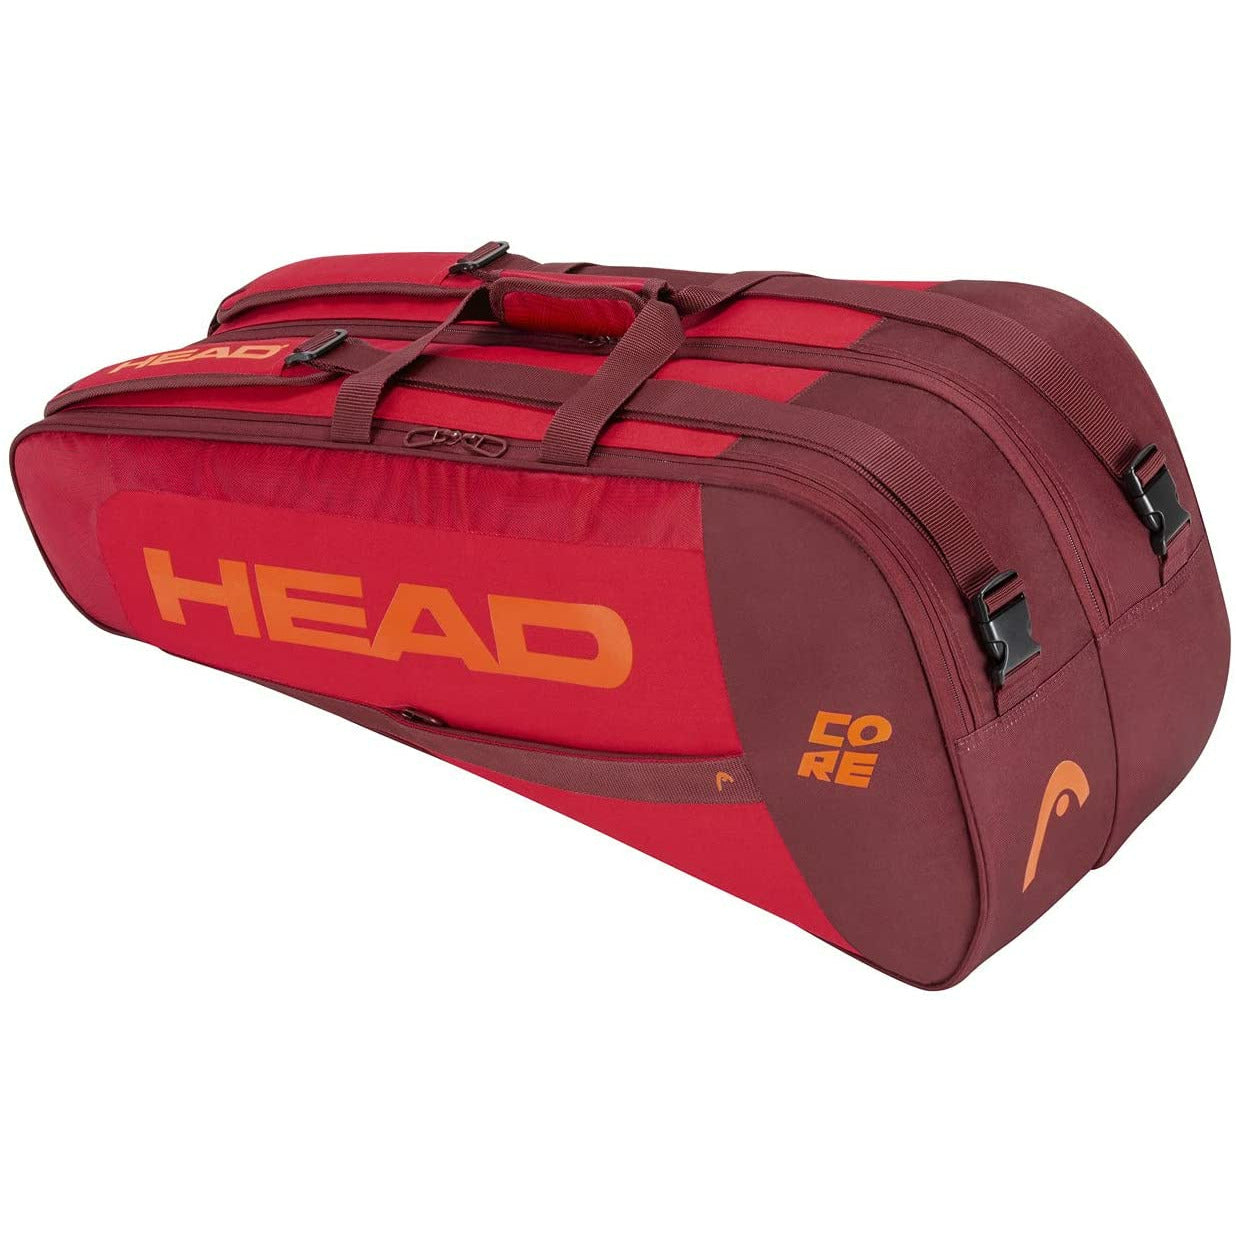 HEAD CORE 9R Supercombi Racket Bag - Red